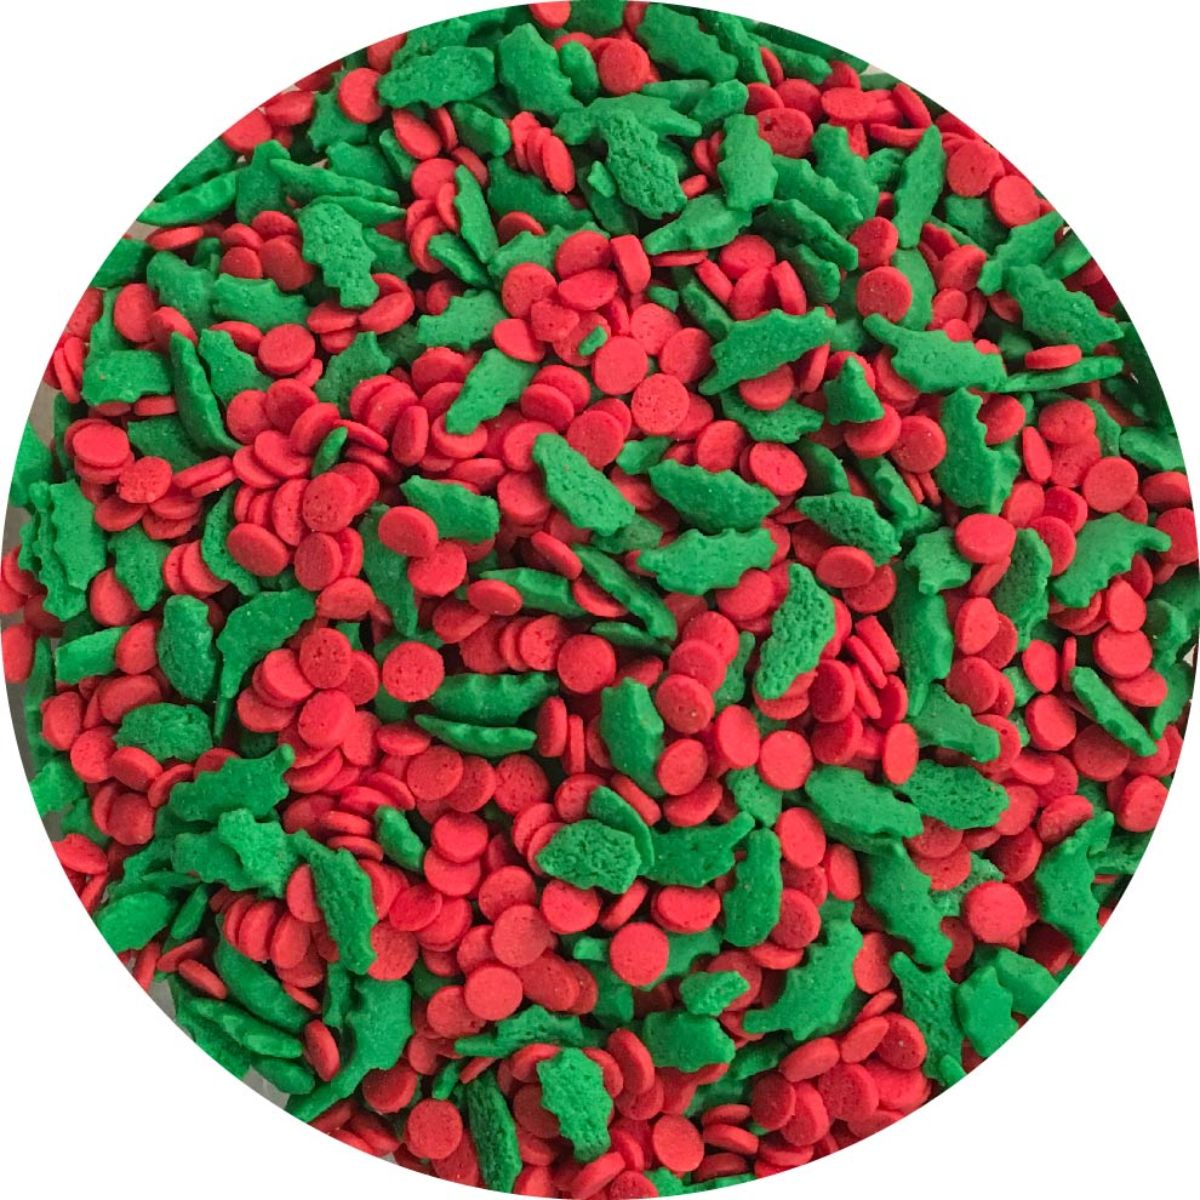 CK Edible Confetti Holly & Berries 2.6oz